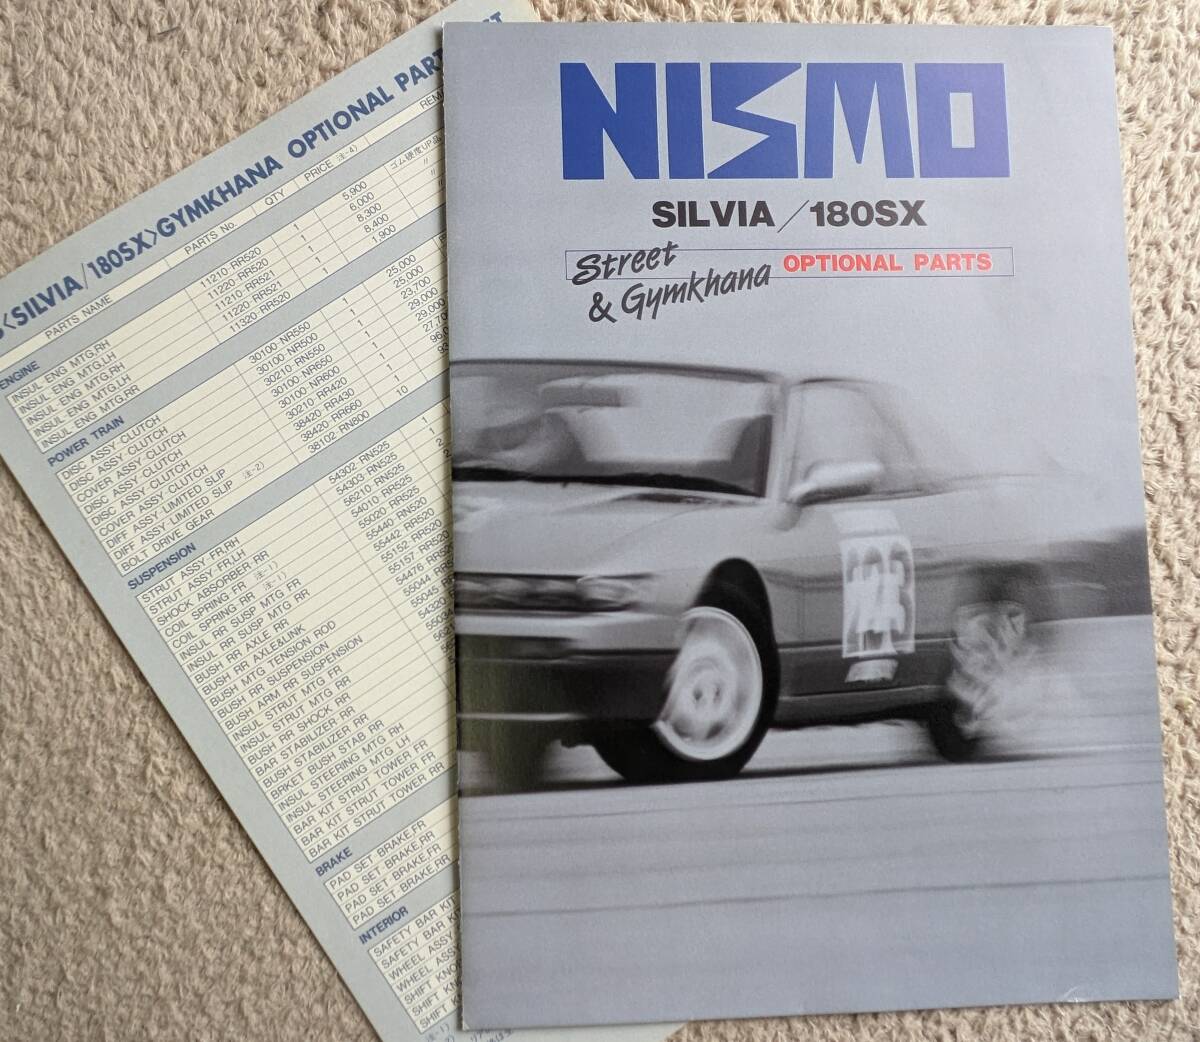 * Nissan Silvia /180SX NISMO опция каталог запчастей (S13 поздняя версия ) все 4 листов запись 